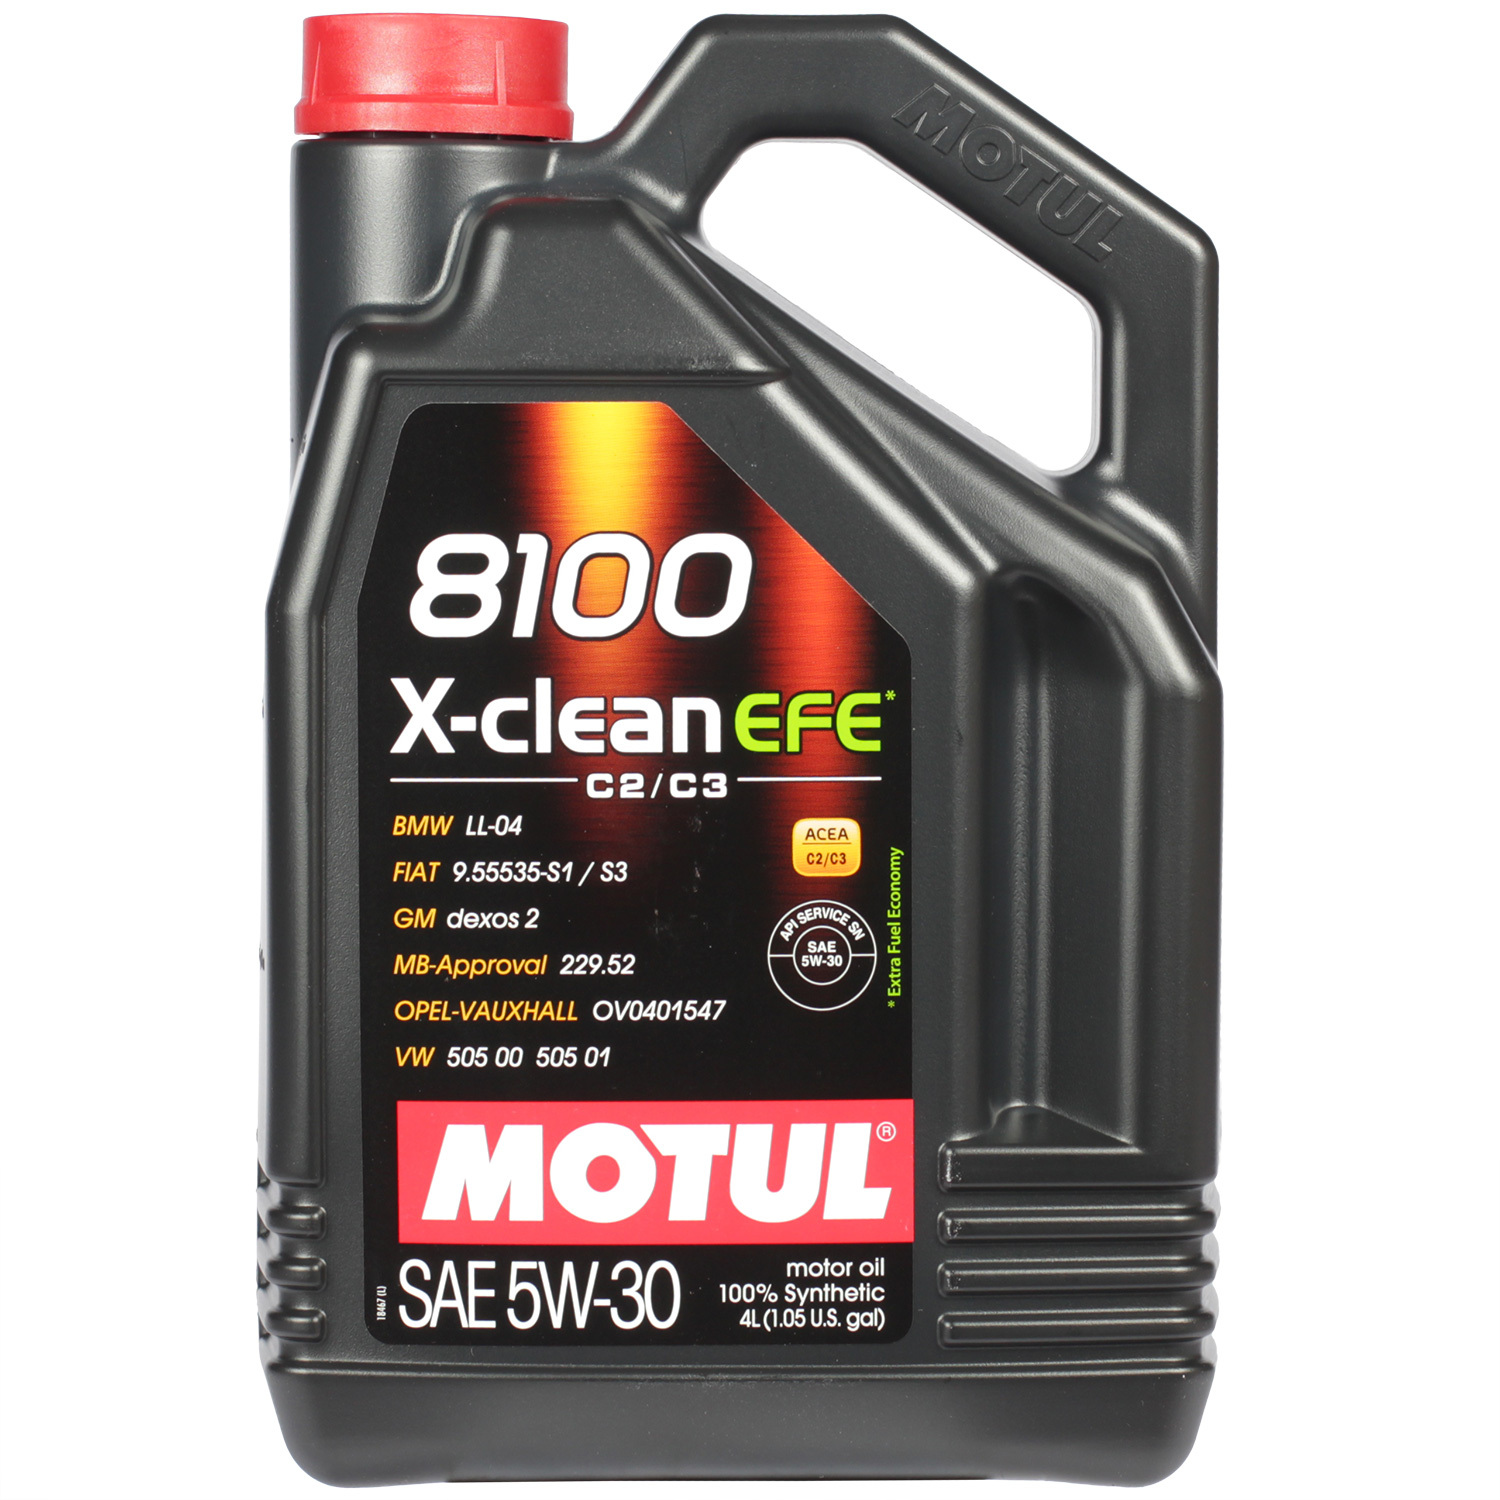 Motul Моторное масло Motul 8100 X-clean EFE 5W-30, 4 л motul моторное масло motul 8100 x clean 5w 30 1 л